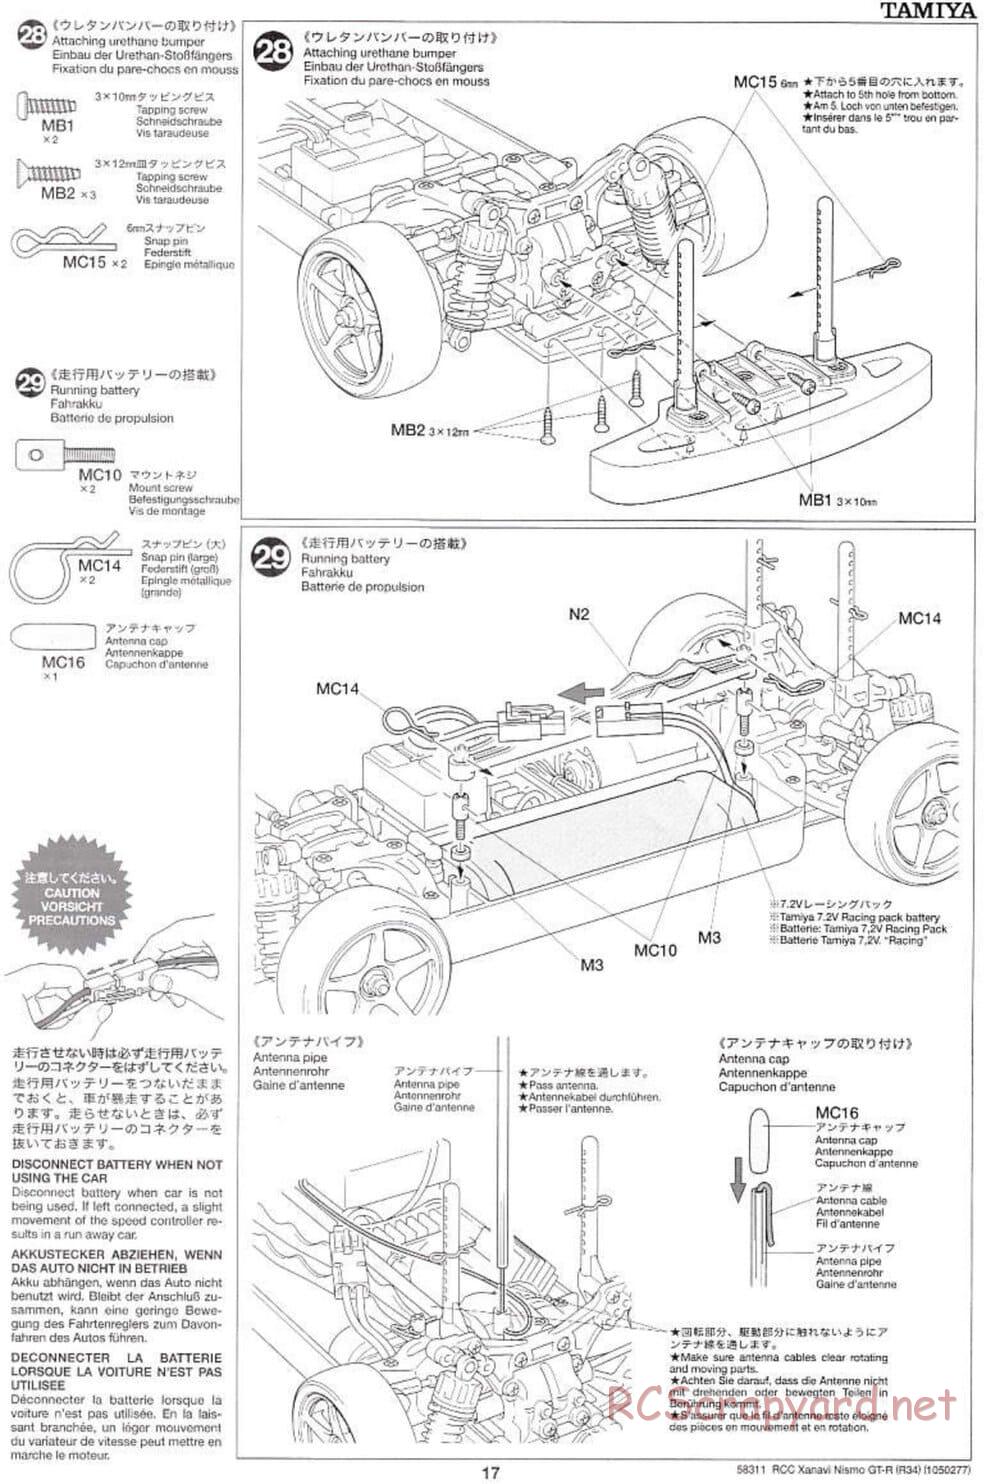 Tamiya - Xanavi Nismo GT-R (R34) - TB-02 Chassis - Manual - Page 17